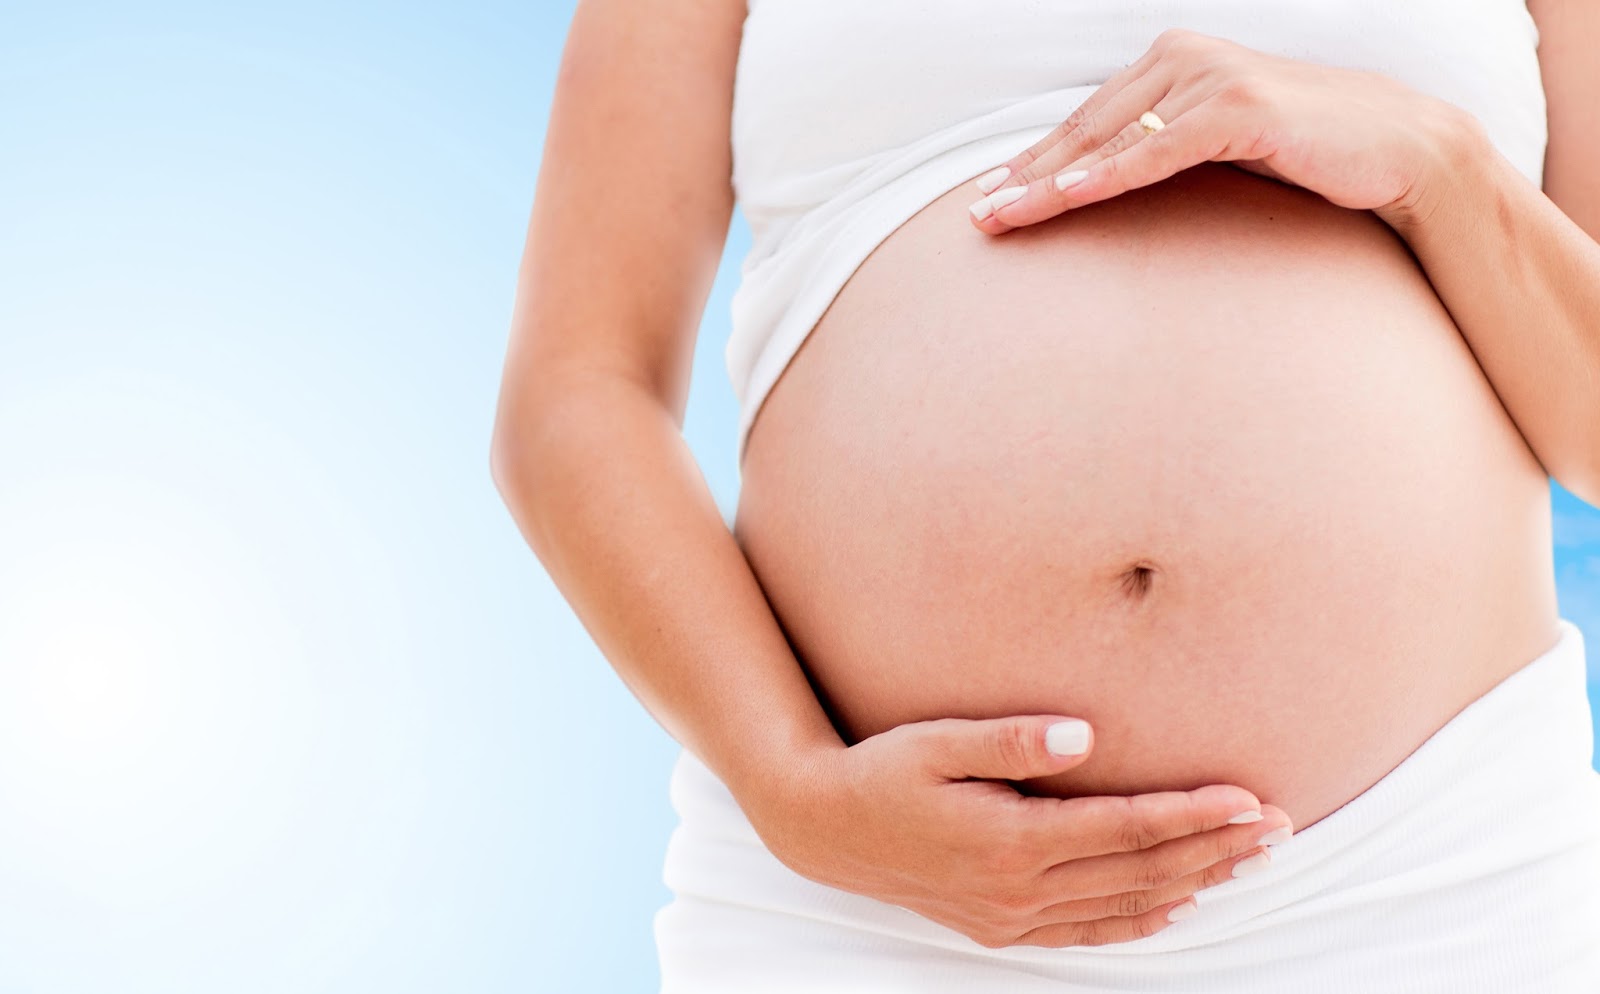 What causes decidual bleeding during pregnancy?